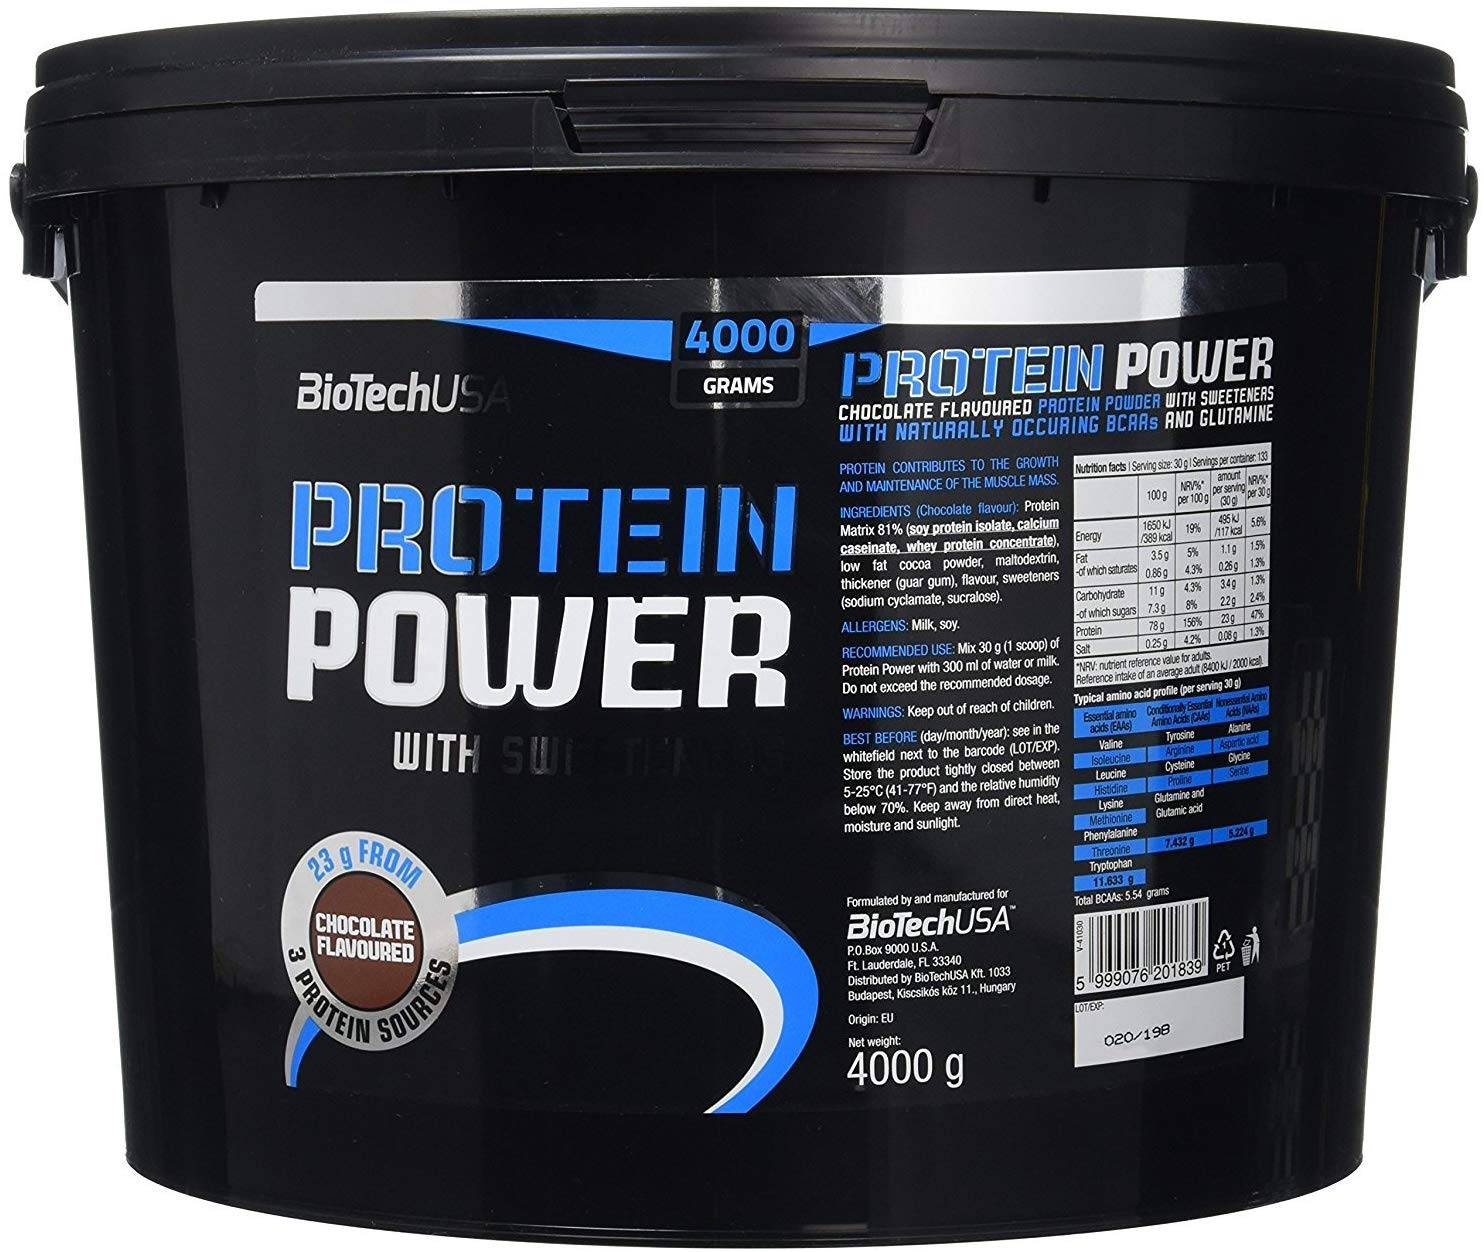 Протеин power. Протеин Power Pro Biotech. Protein Power от Biotech. Olimp System Protein 80 700 g. Протеин Protein Power креатин шоколад Biotech.